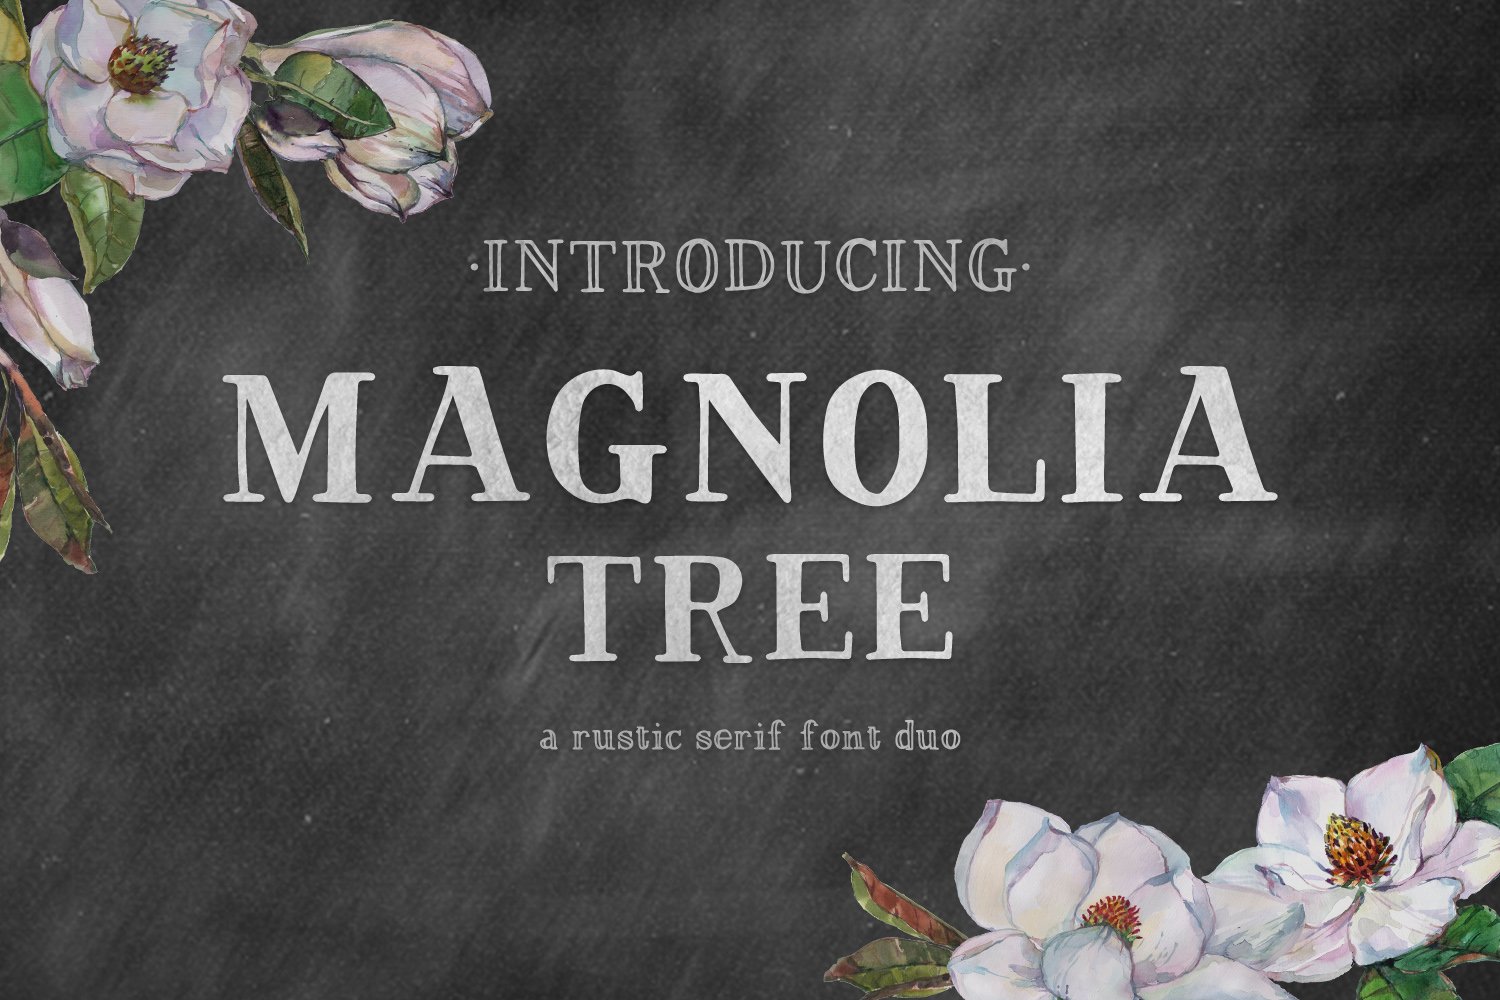 Magnolia Tree Rustic Font cover image.